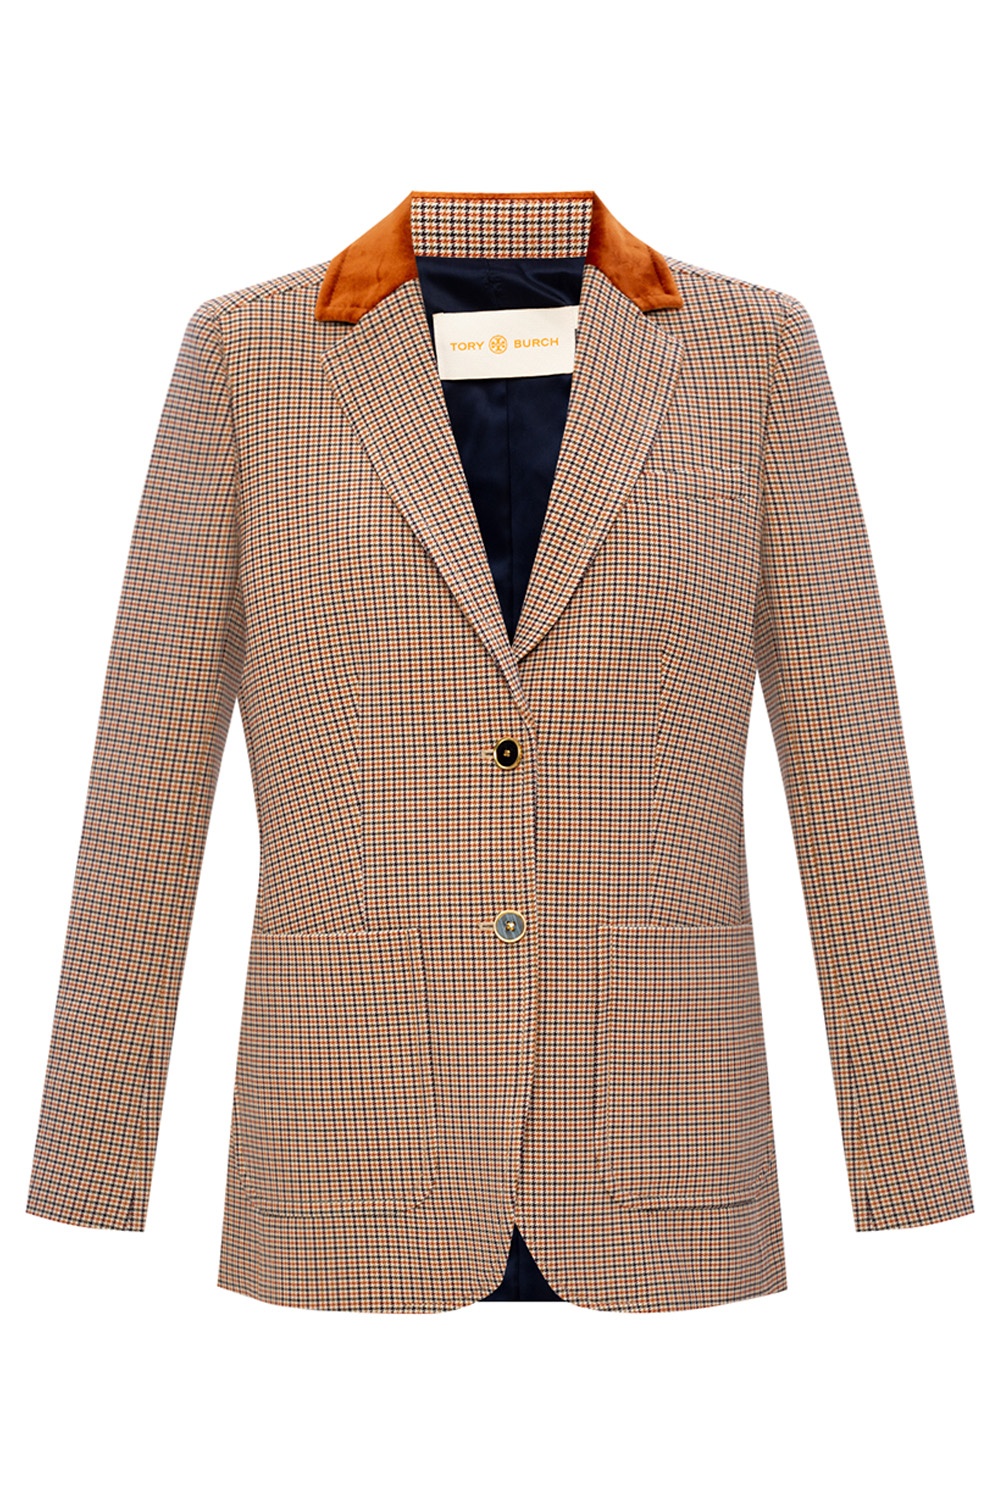 Life Sux Leopard Jacket block | Women's Clothing | IetpShops | Tory Burch  Checked blazer